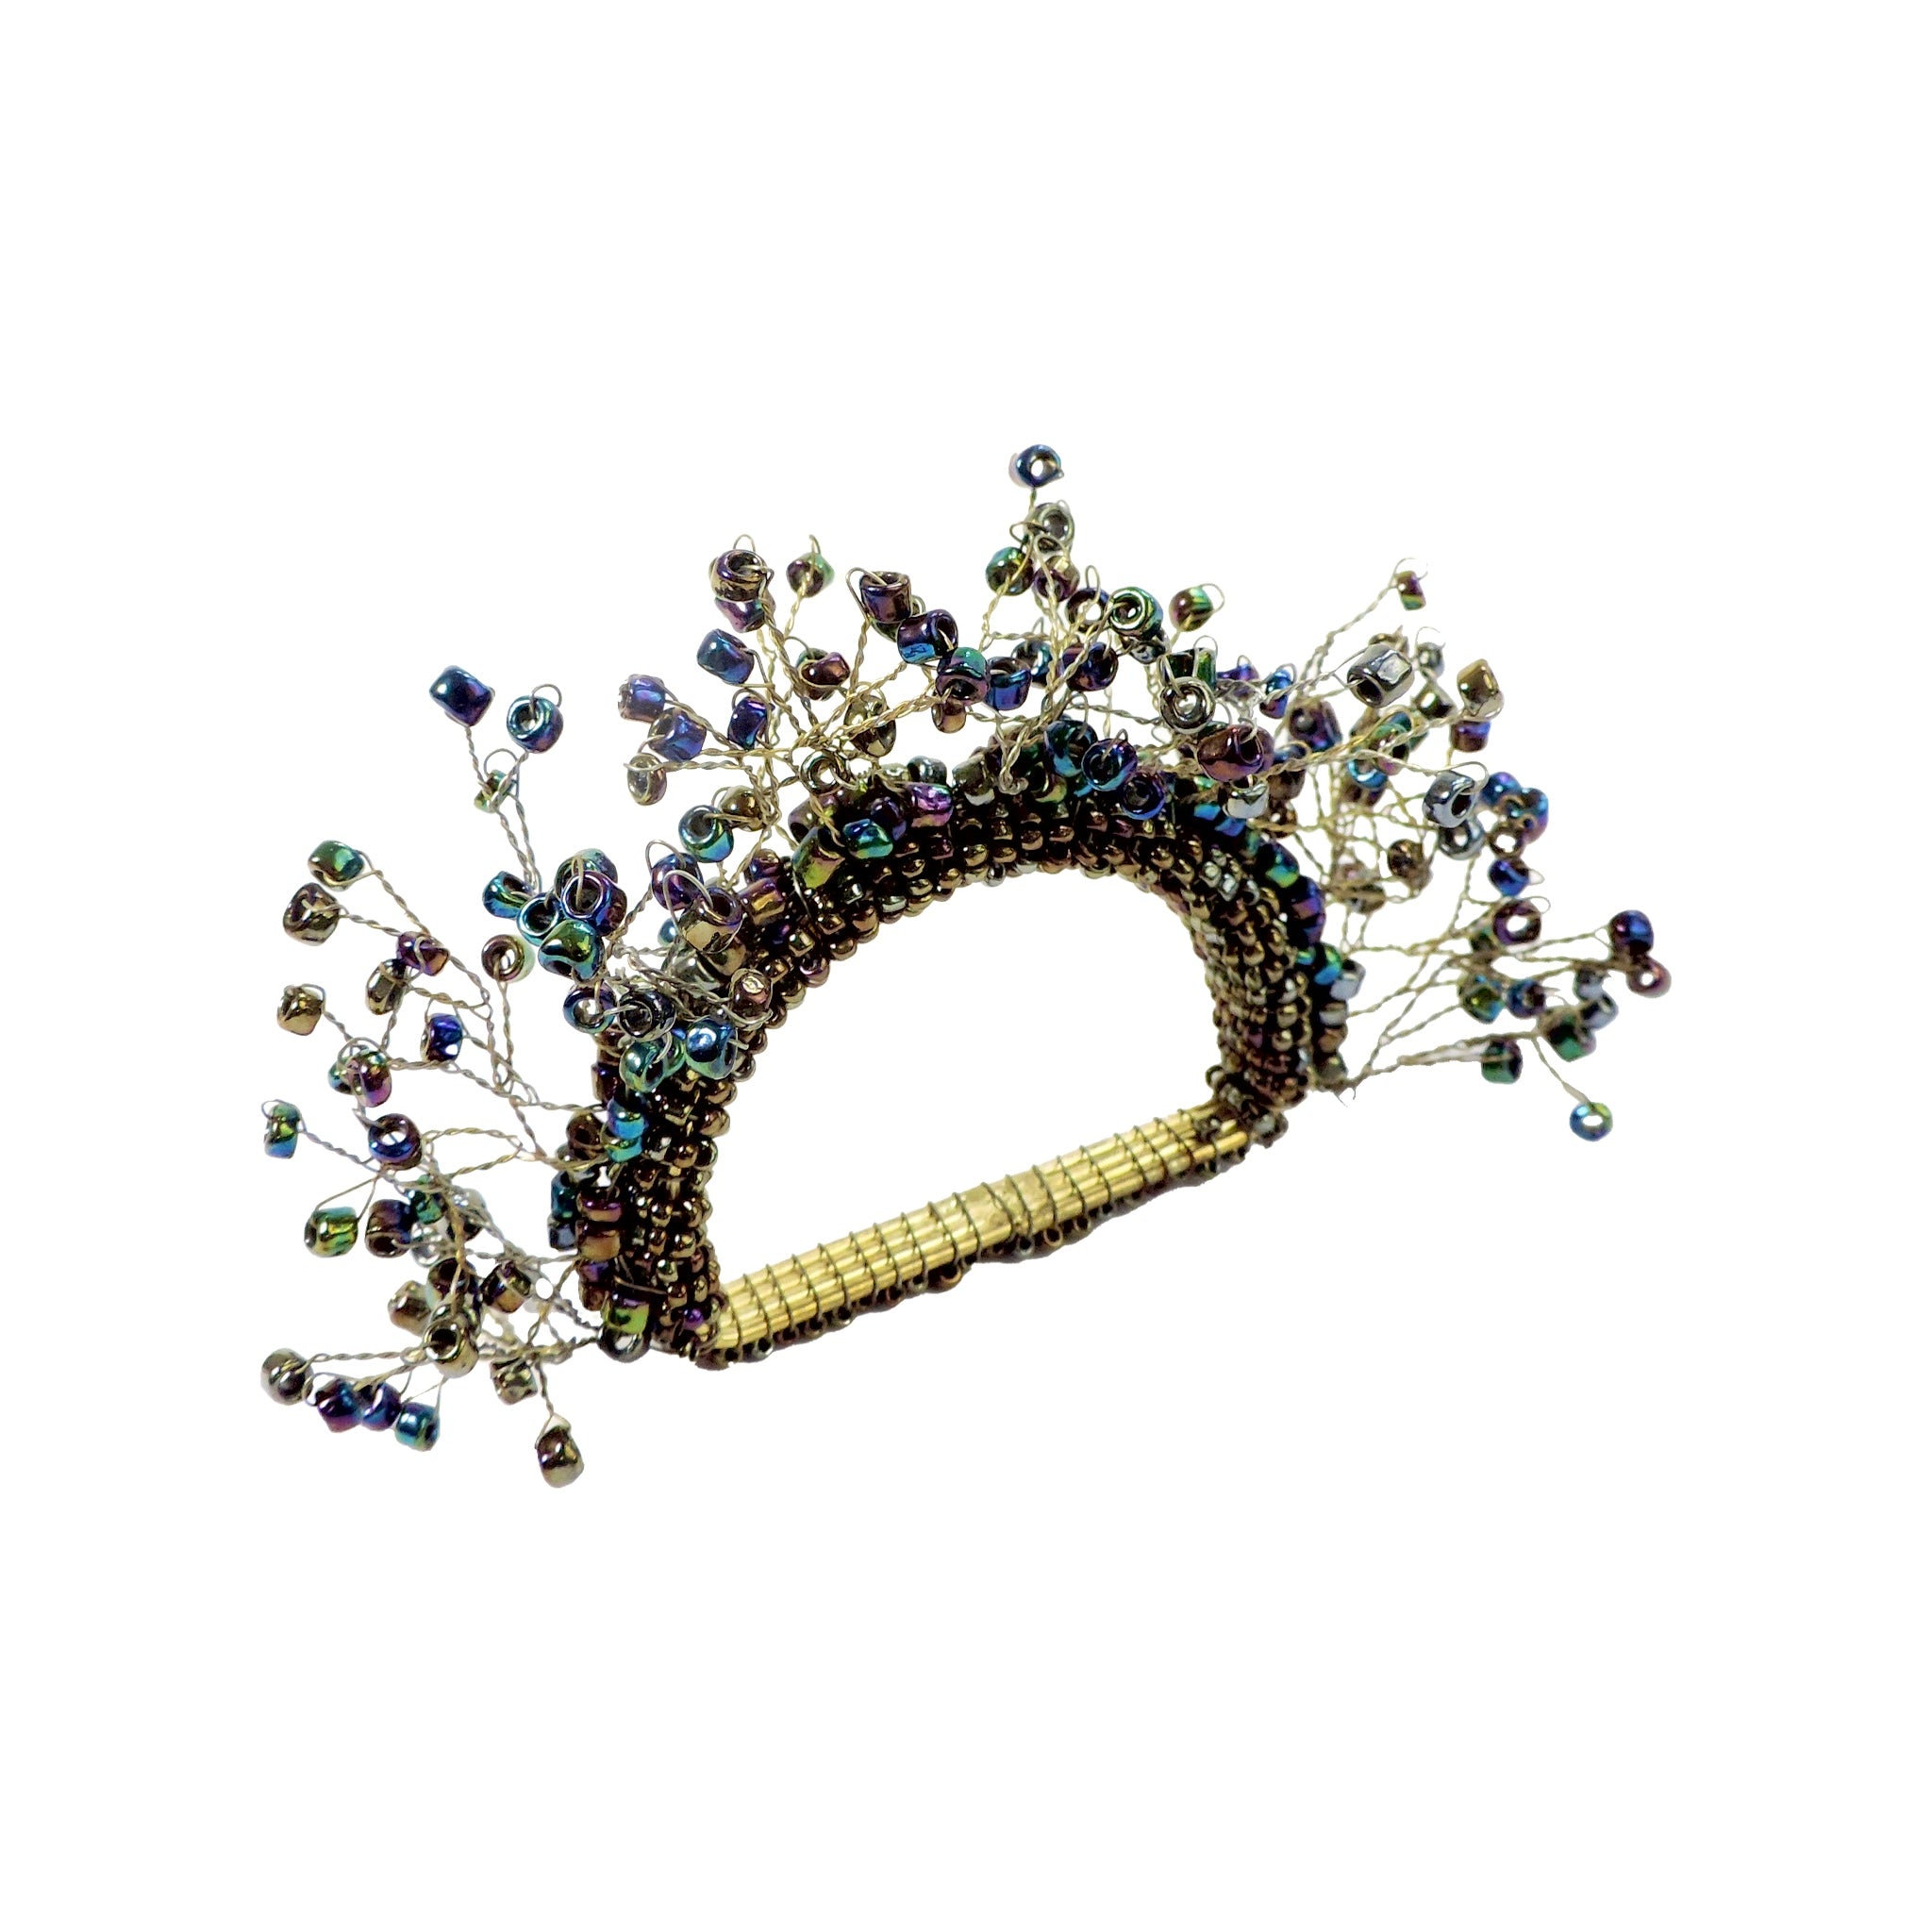 Beaded Shag Napkin Ring in Peacock, Set of 4